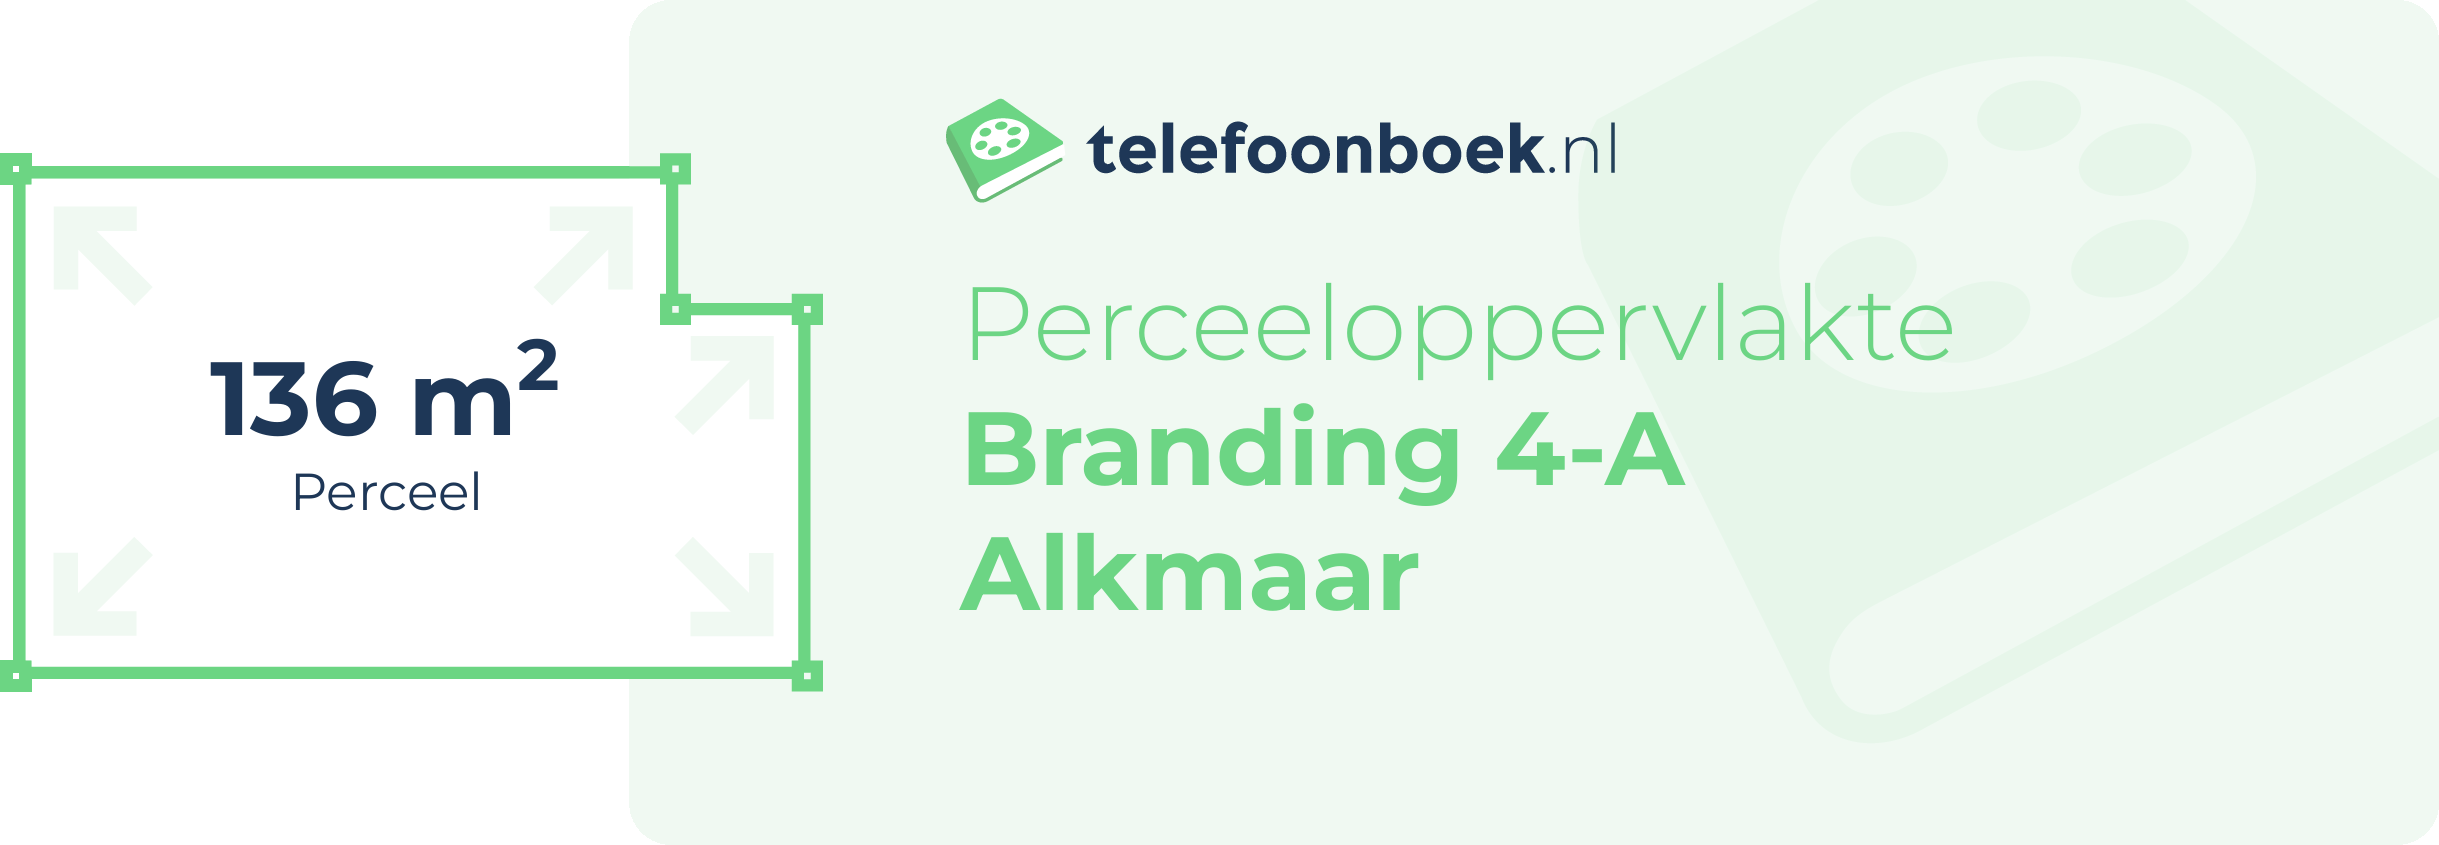 Perceeloppervlakte Branding 4-A Alkmaar